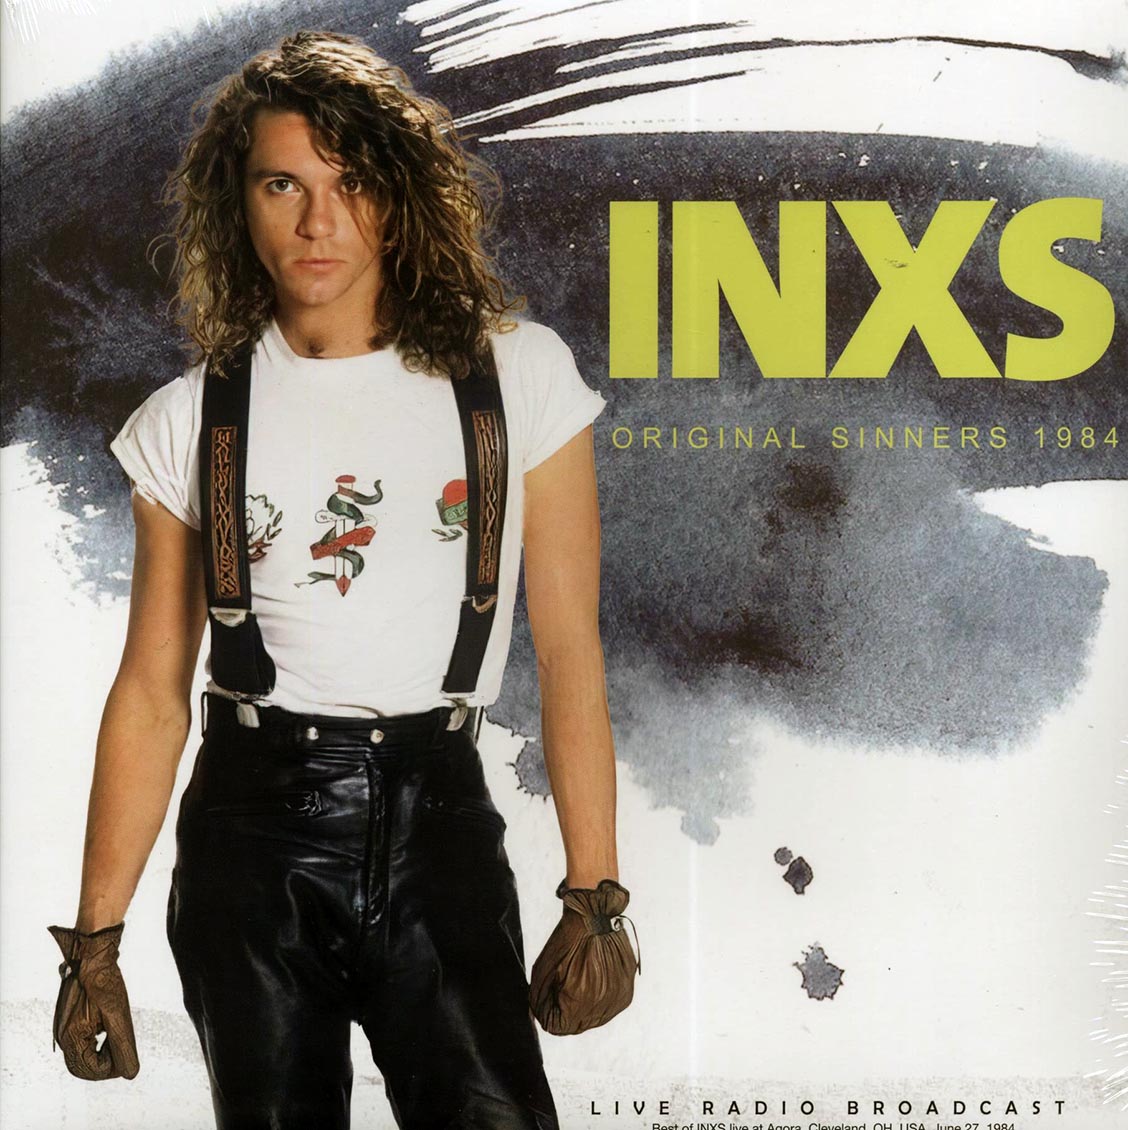 INXS - Original Sinners 1984: Live At Agora, Cleveland